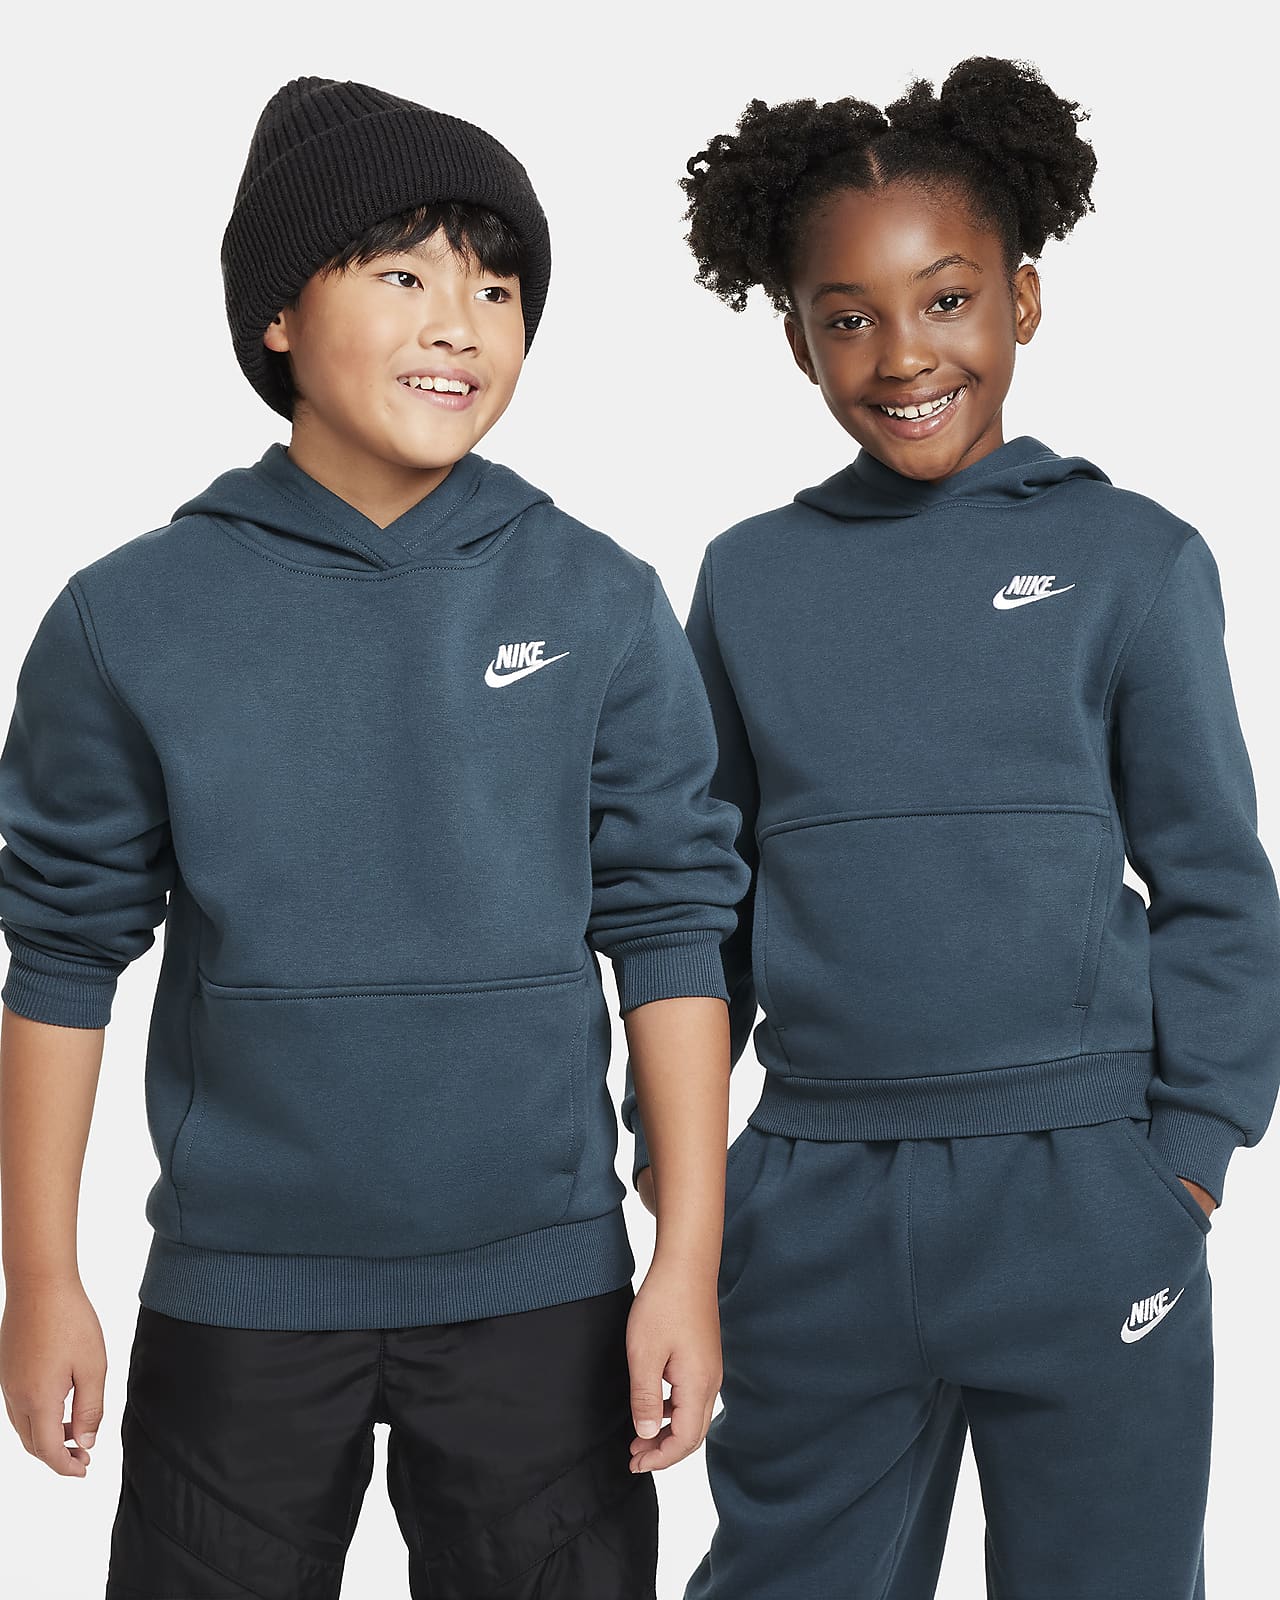 Nike Sportswear AT Nike Club für Kinder. ältere Hoodie Fleece